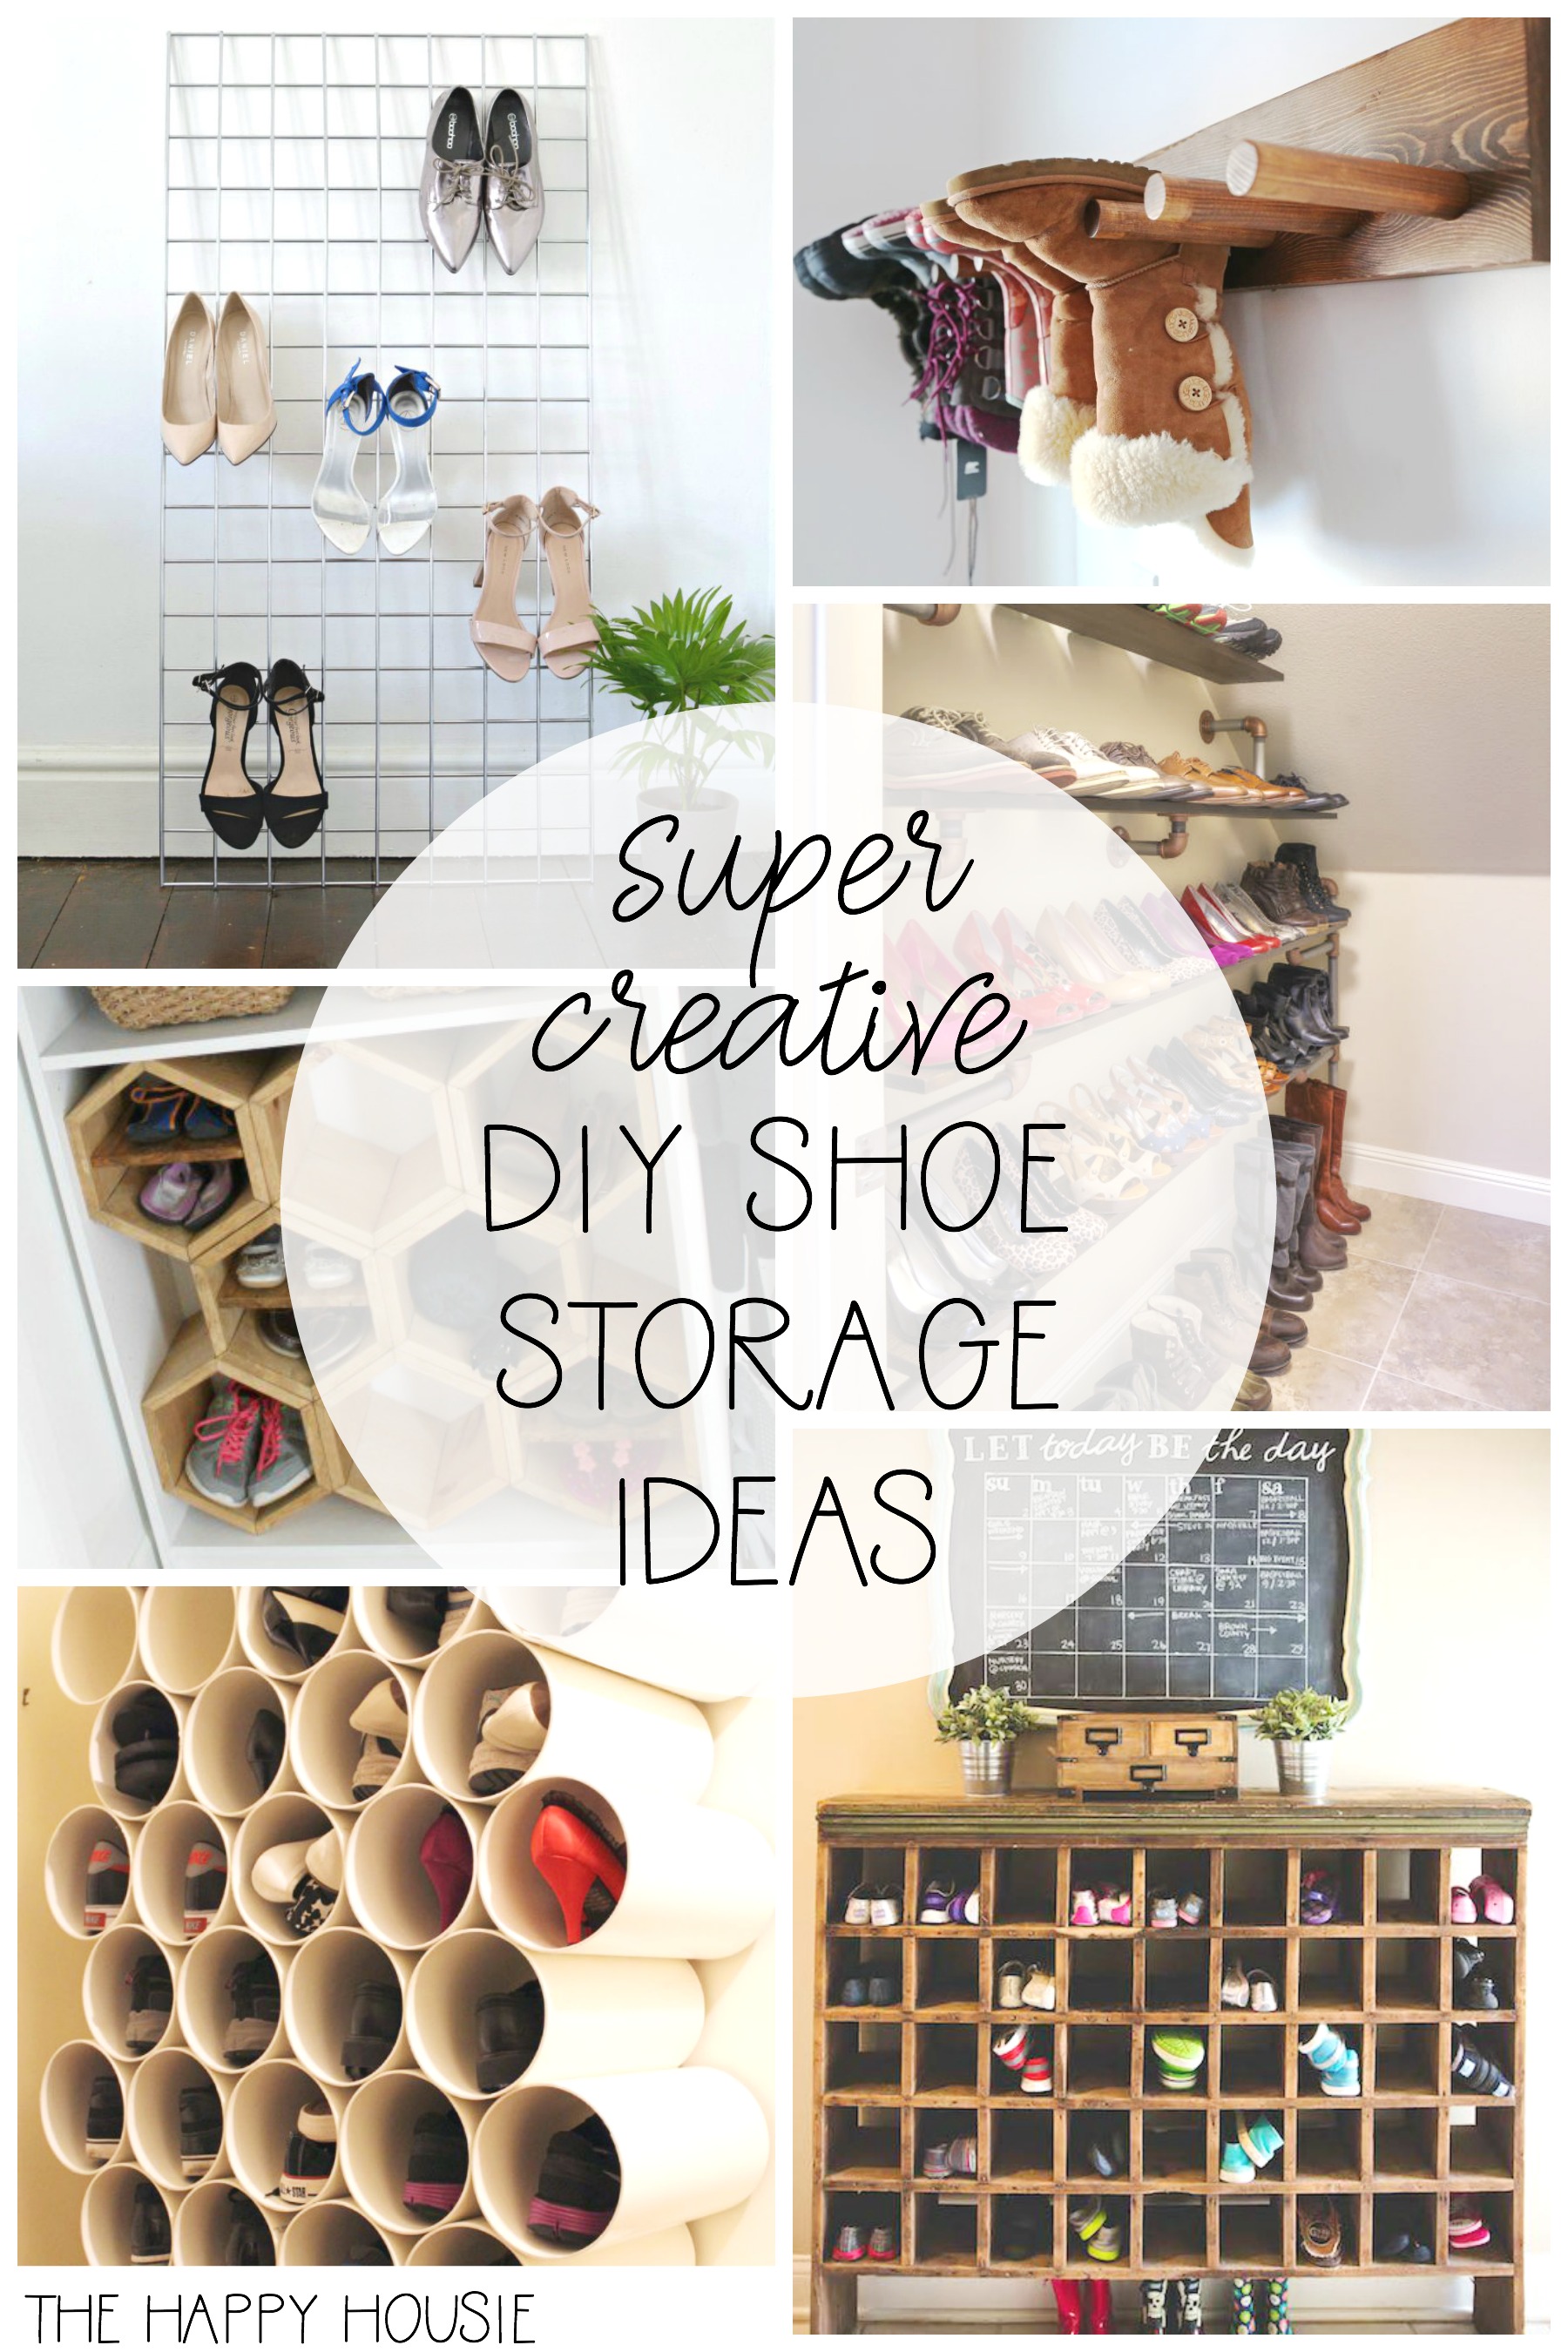 https://www.thehappyhousie.com/wp-content/uploads/2018/08/super-creative-DIY-shoe-storage-ideas-at-the-happy-housie.jpg